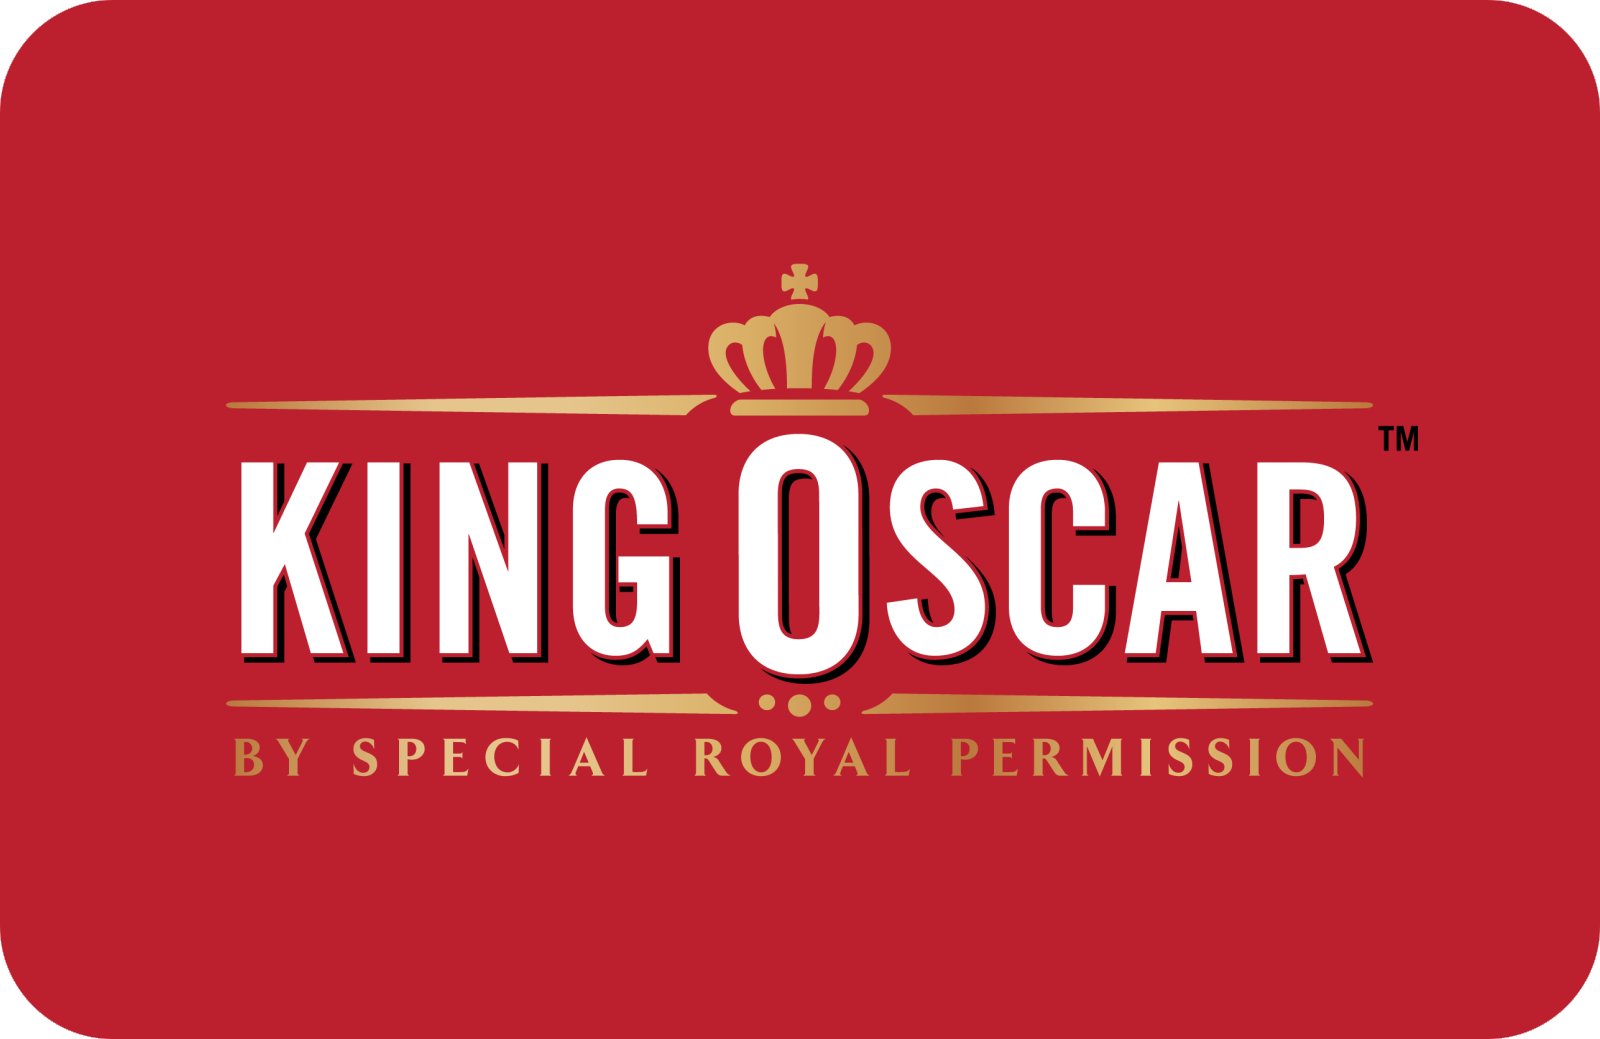 King Oscar logo